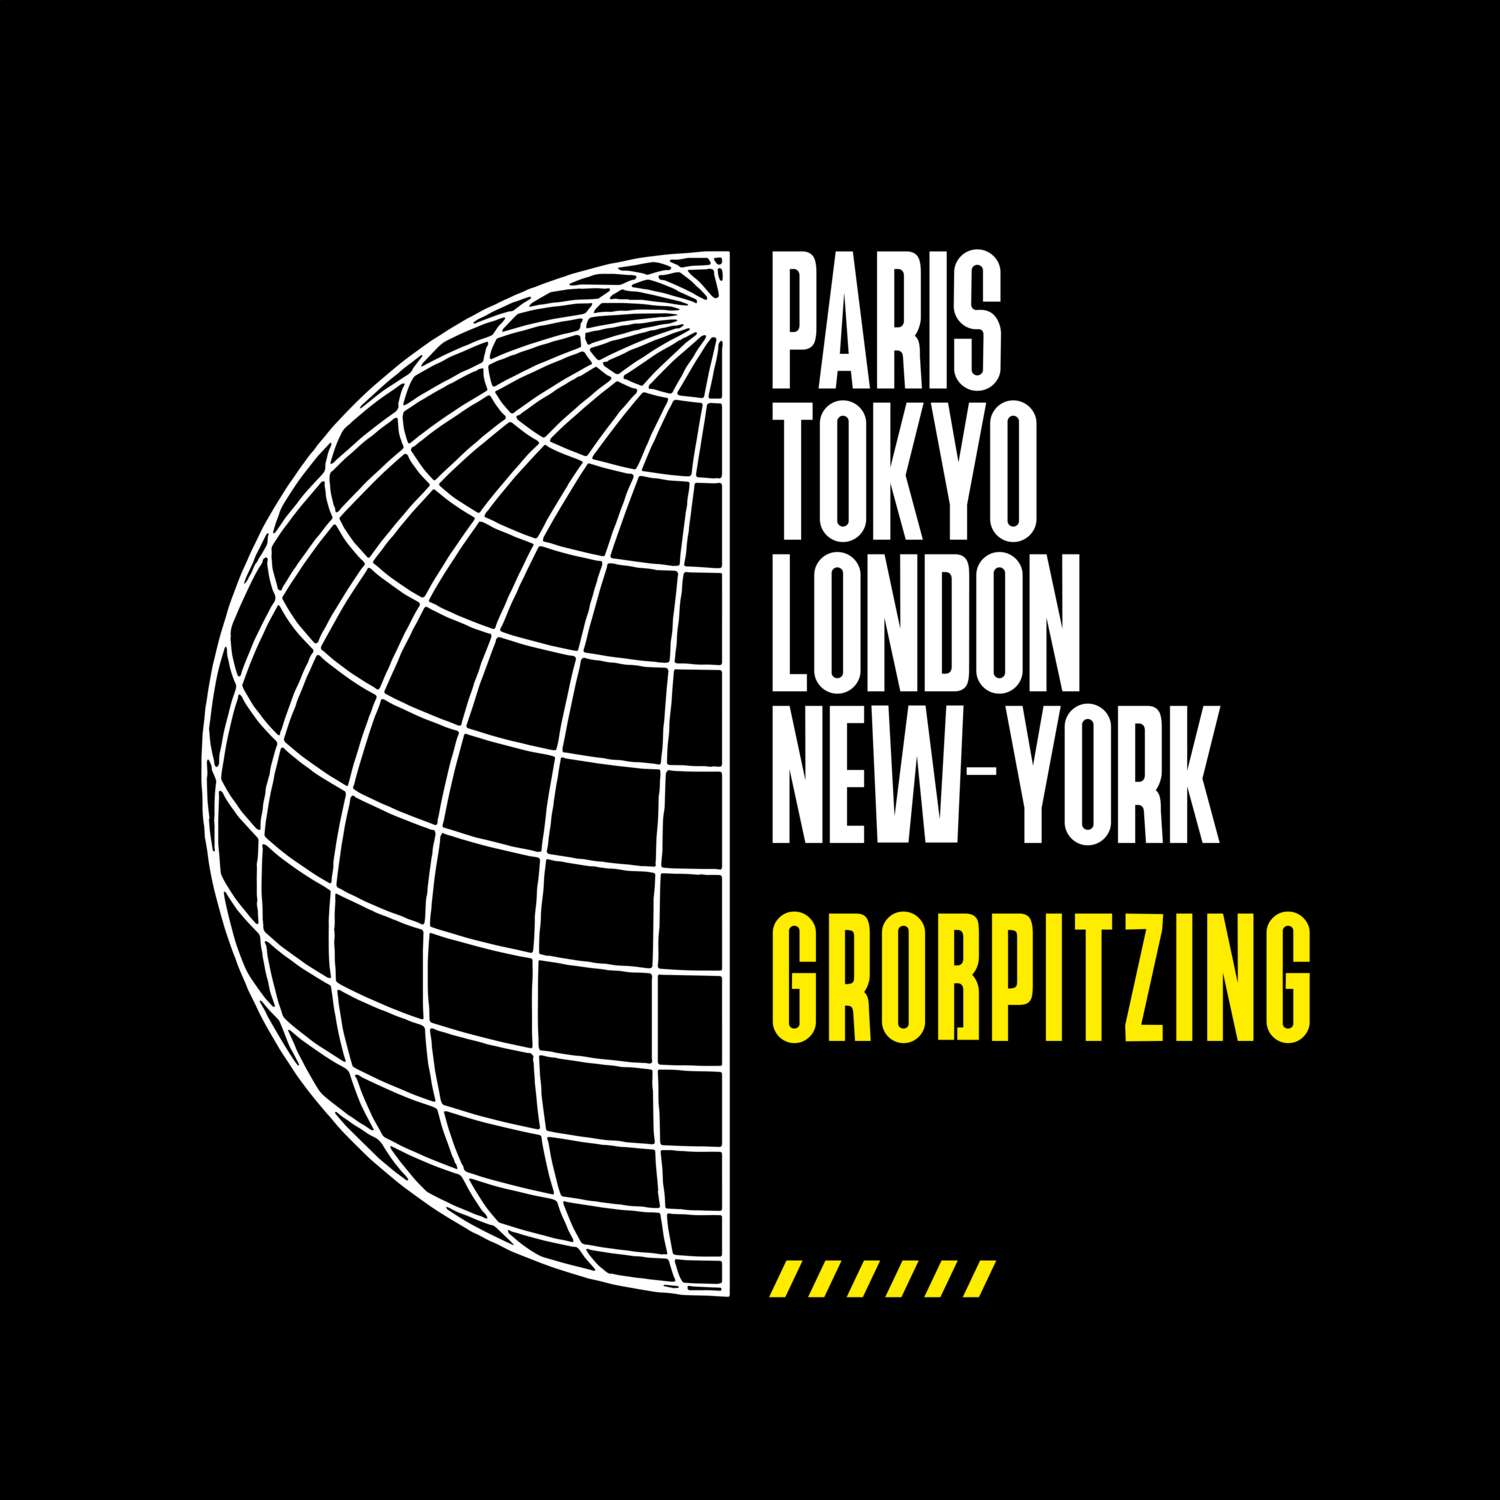 Großpitzing T-Shirt »Paris Tokyo London«